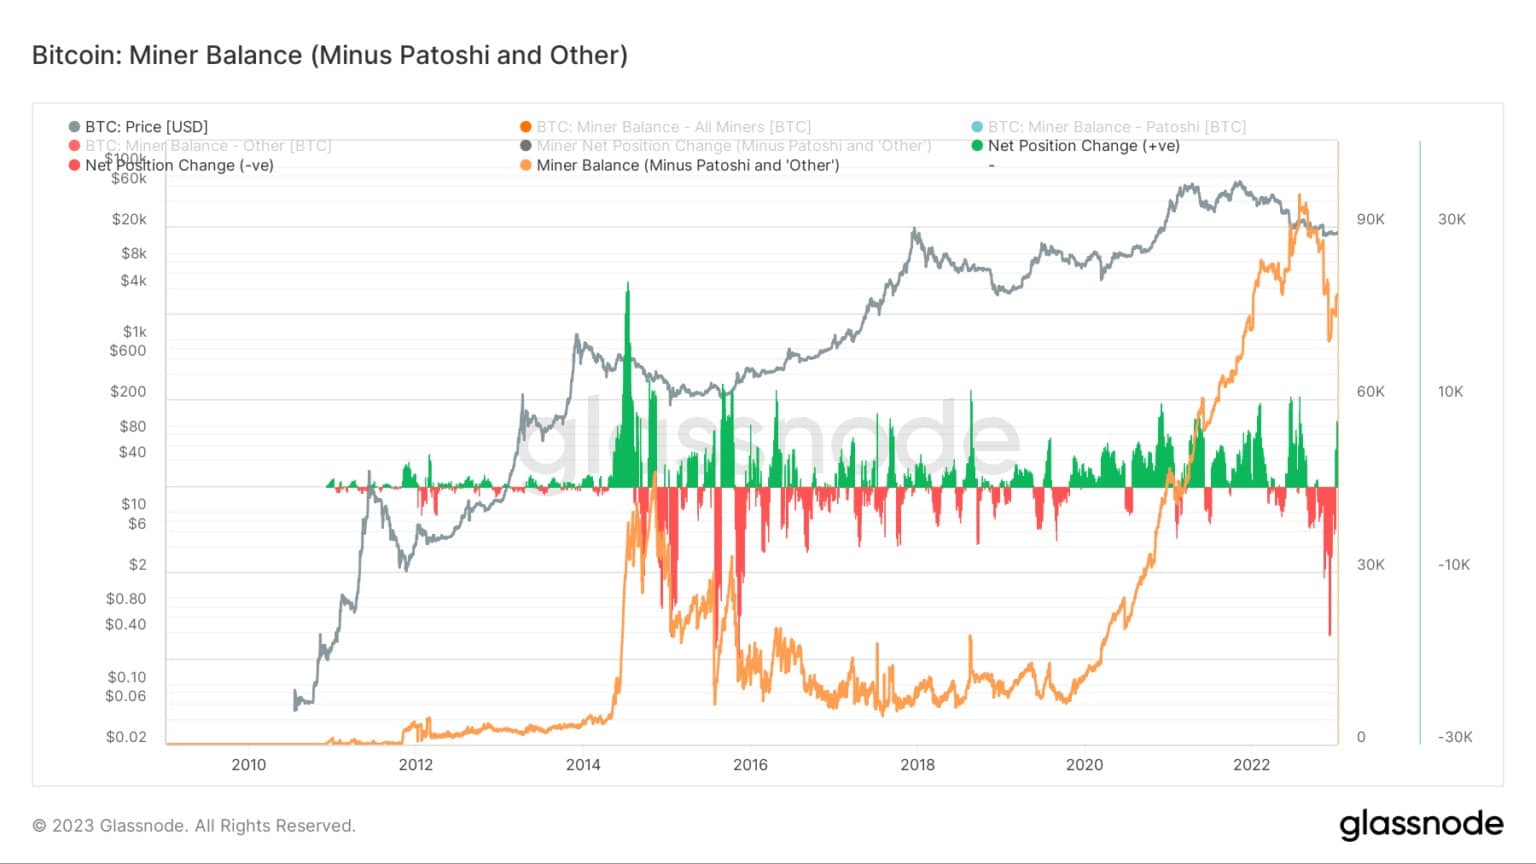 Bitcoin: Miner Balance (Minus Patoshi and Other) - Source Glassnode.com